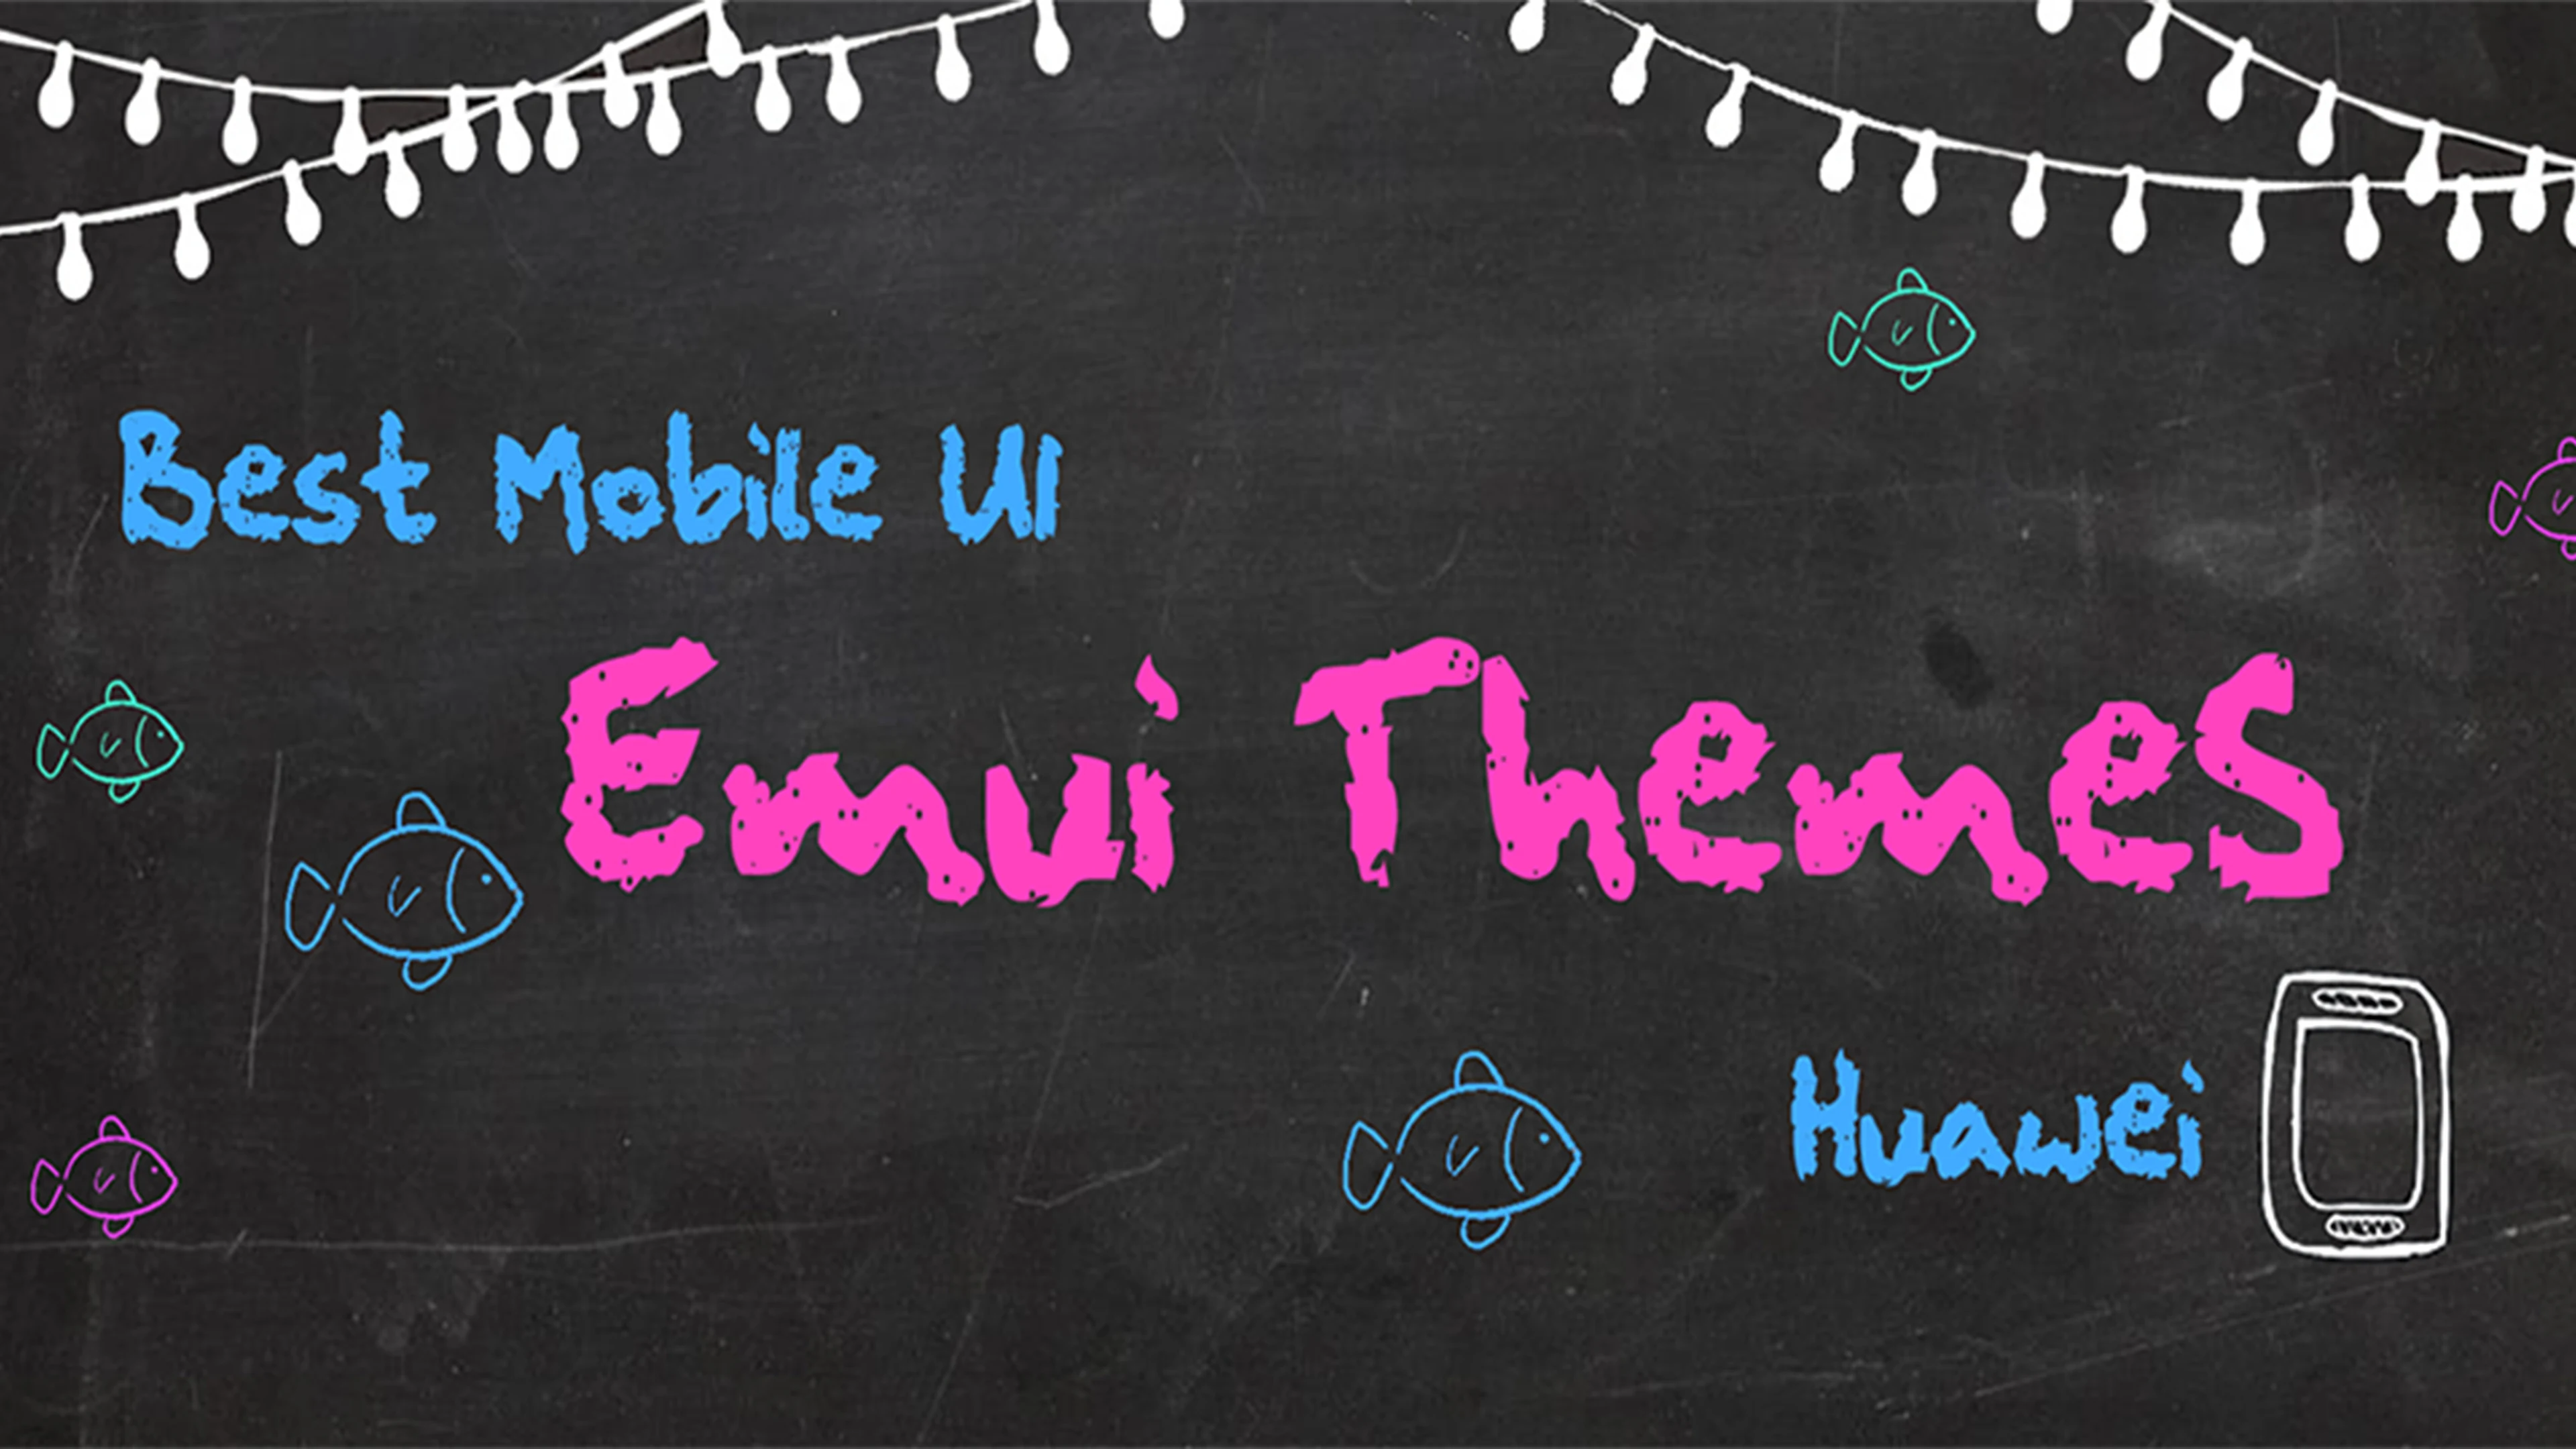 NewTheme] Pikachu Theme For EMUI 9 And Magic UI Available Now